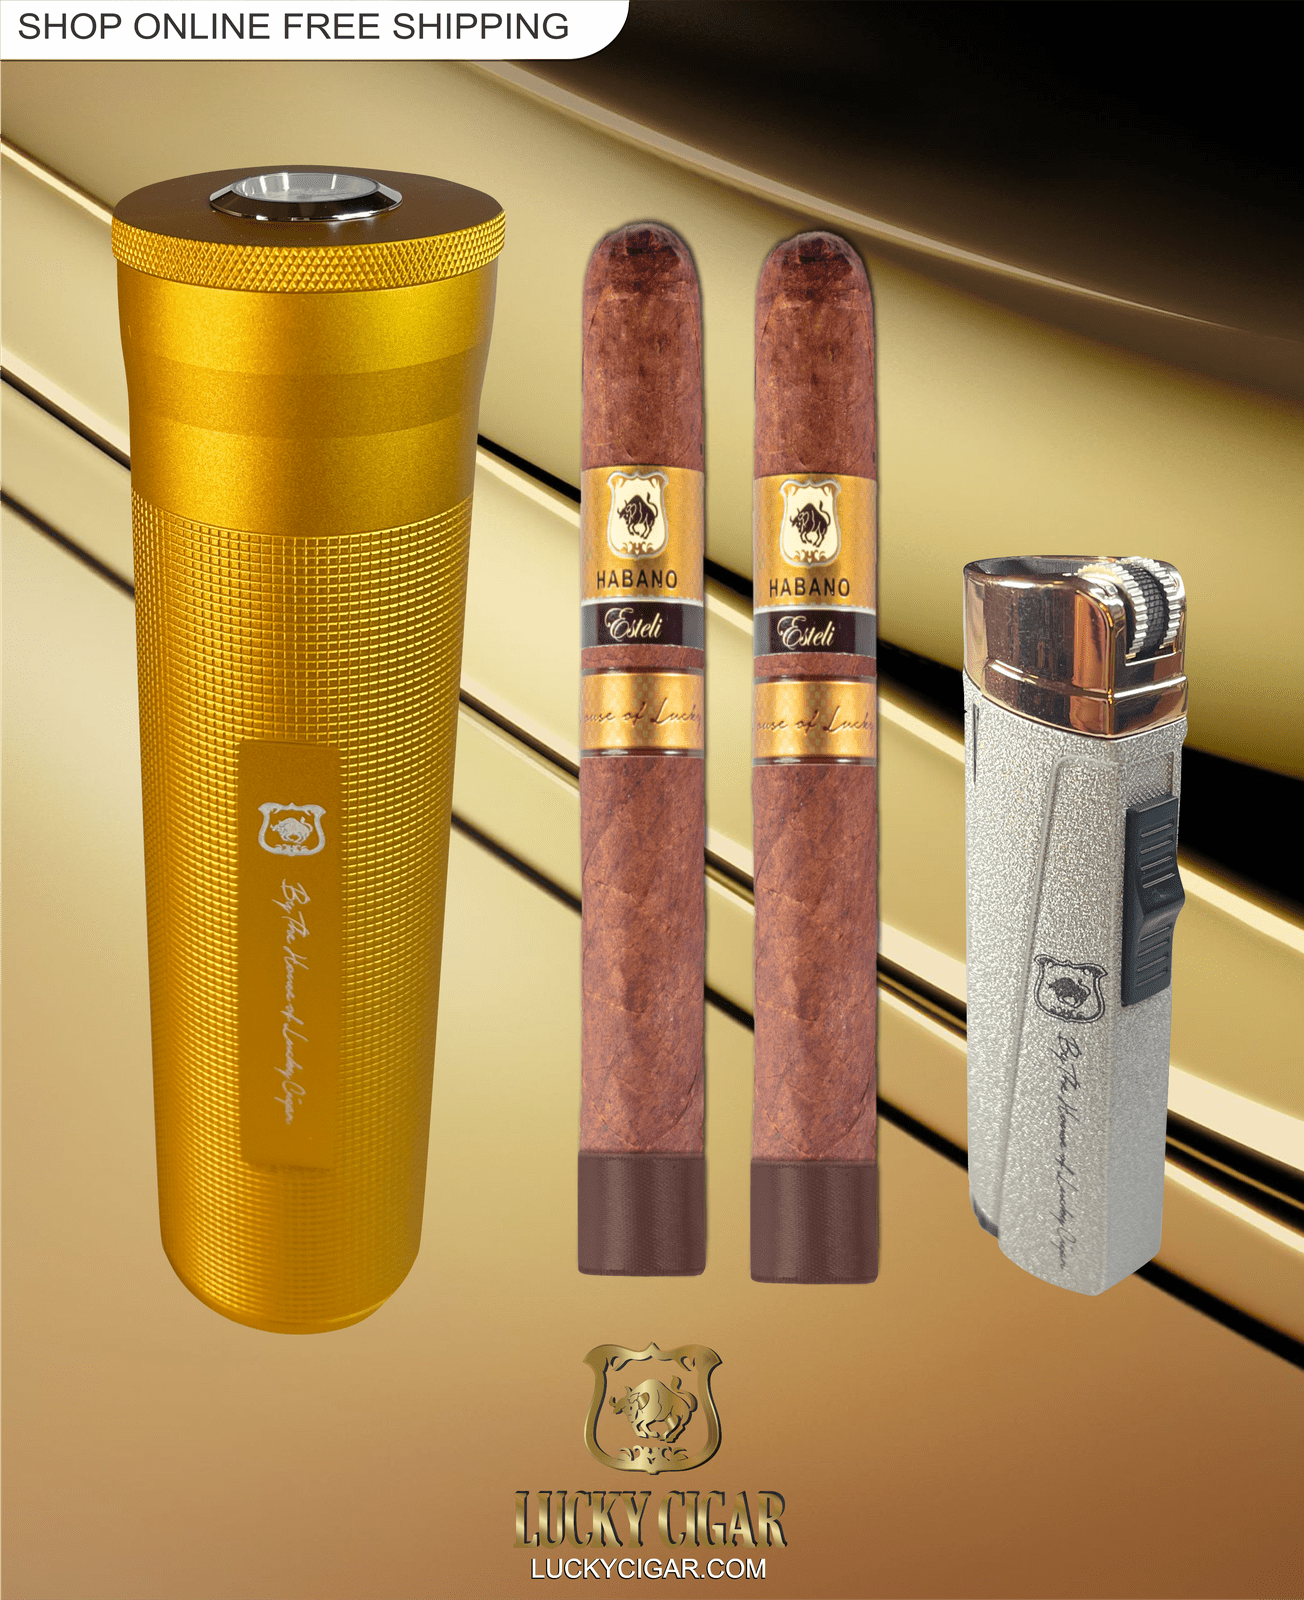 Habano Cigars: Habano Esteli by Lucky Cigar: Set of 2 Churchill Cigars with Travel Humidor, Lighter